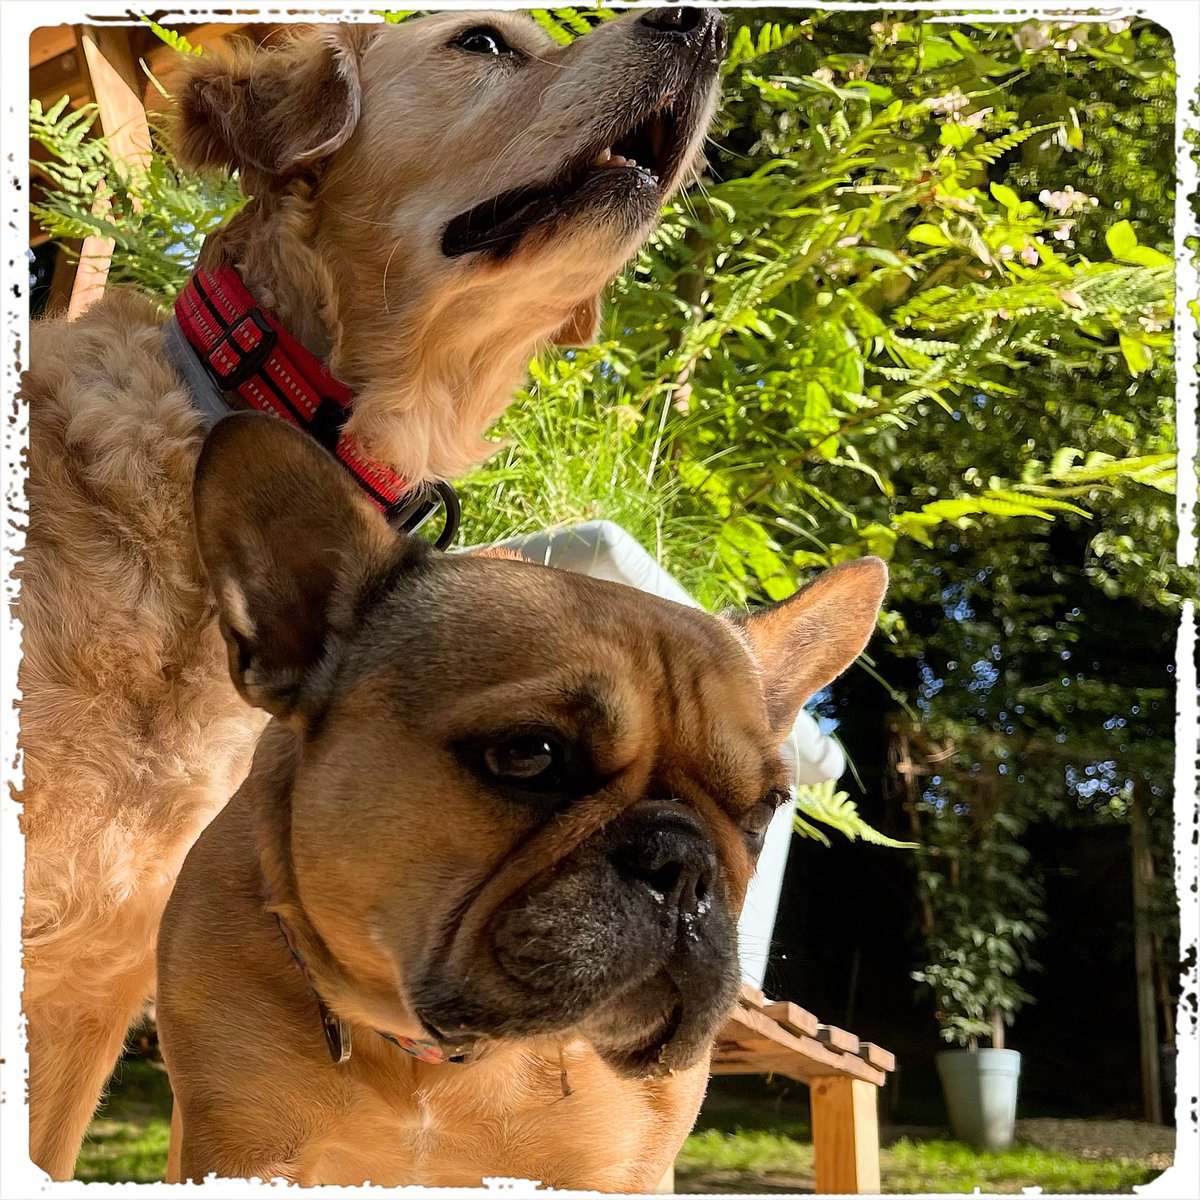 Jessie und Rosi 😁🐶😁…. 
#doglover #ilovemydog #instadog  #dogislove #trustrespectlove #hundeland #hundeblog #lieblingshund #fellnase  #besterhund  #dogsneeddogs